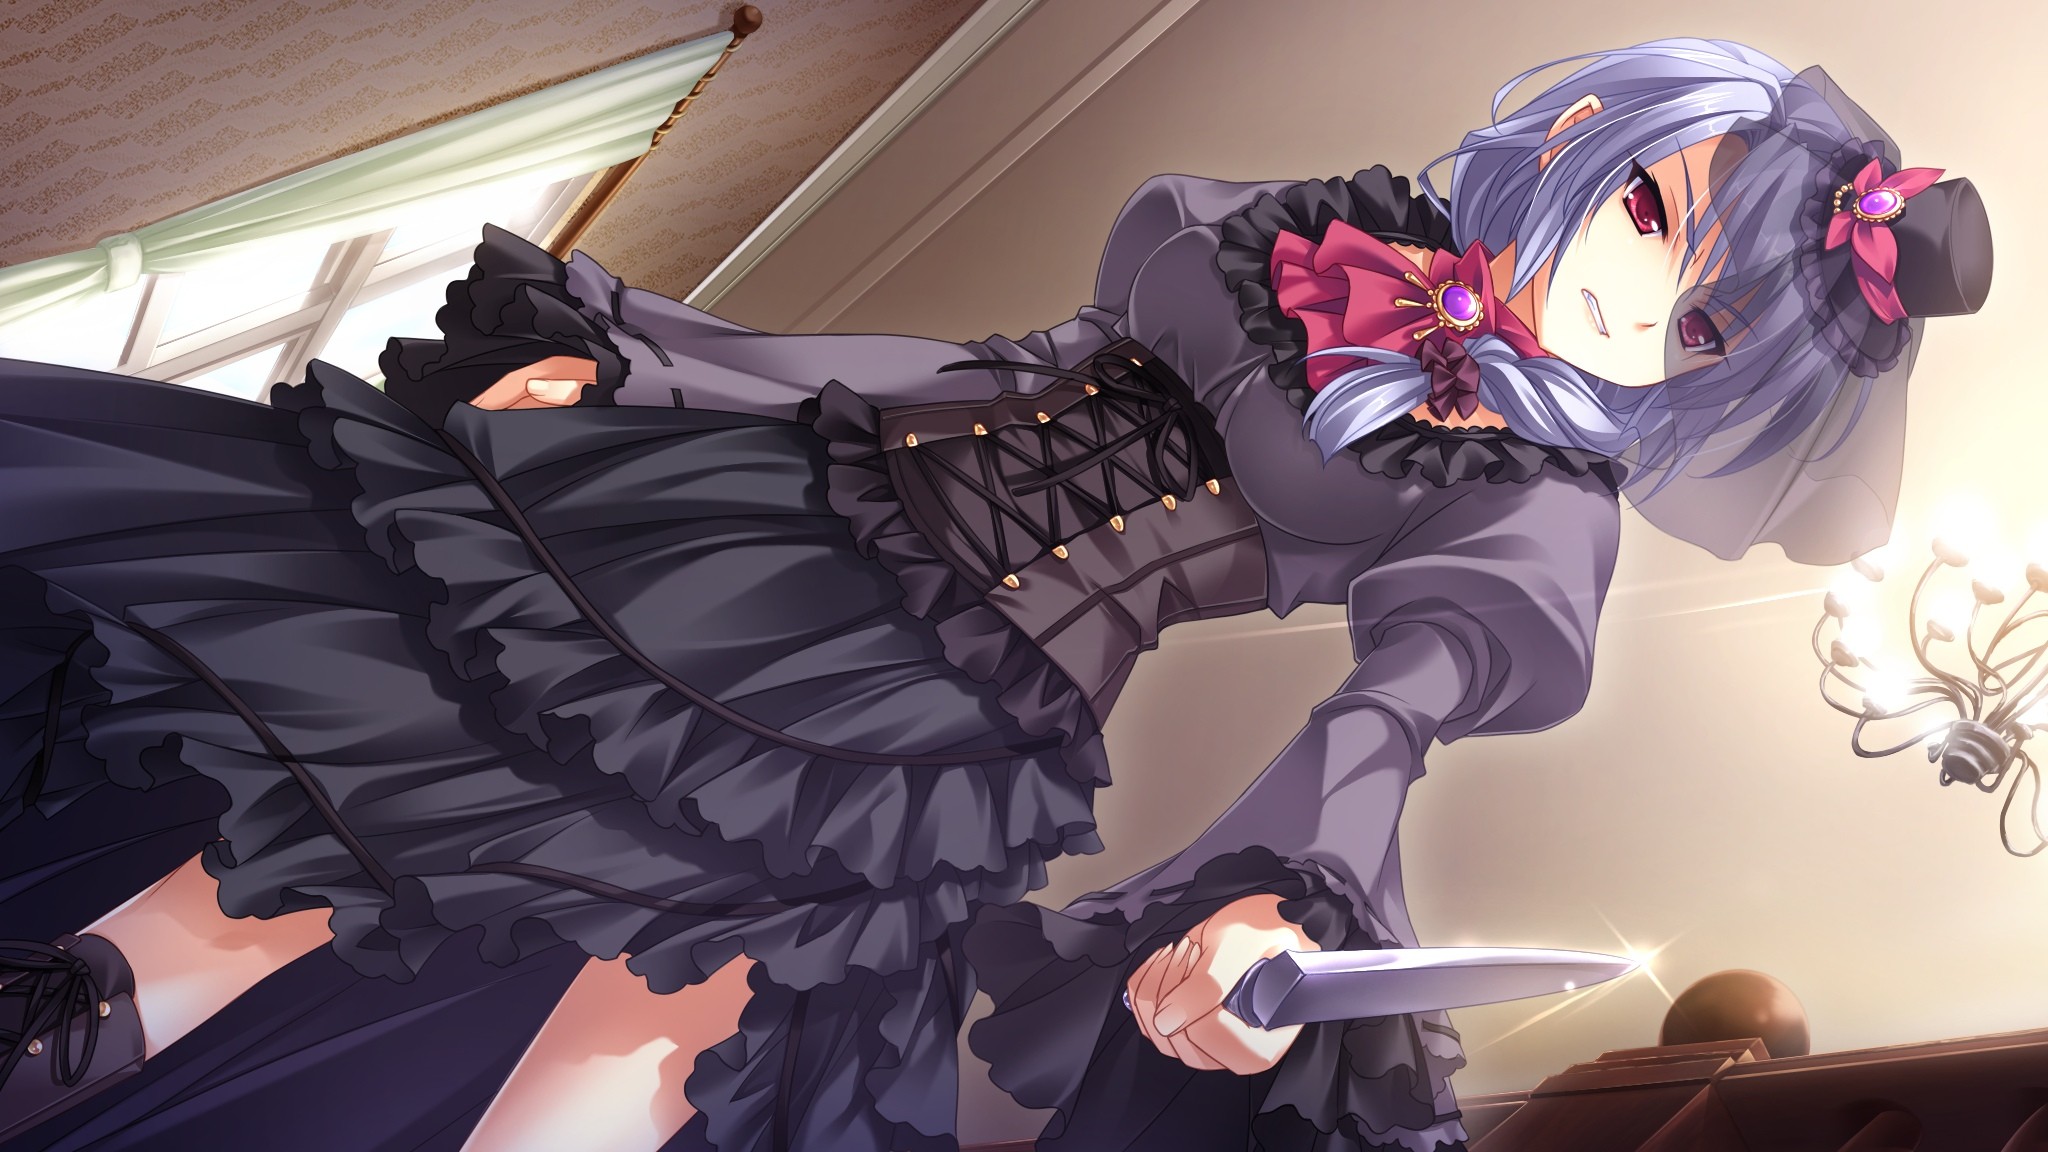 Anime 2048x1152 anime girls anime visual novel black dress dress dagger knife hat women with hats angry